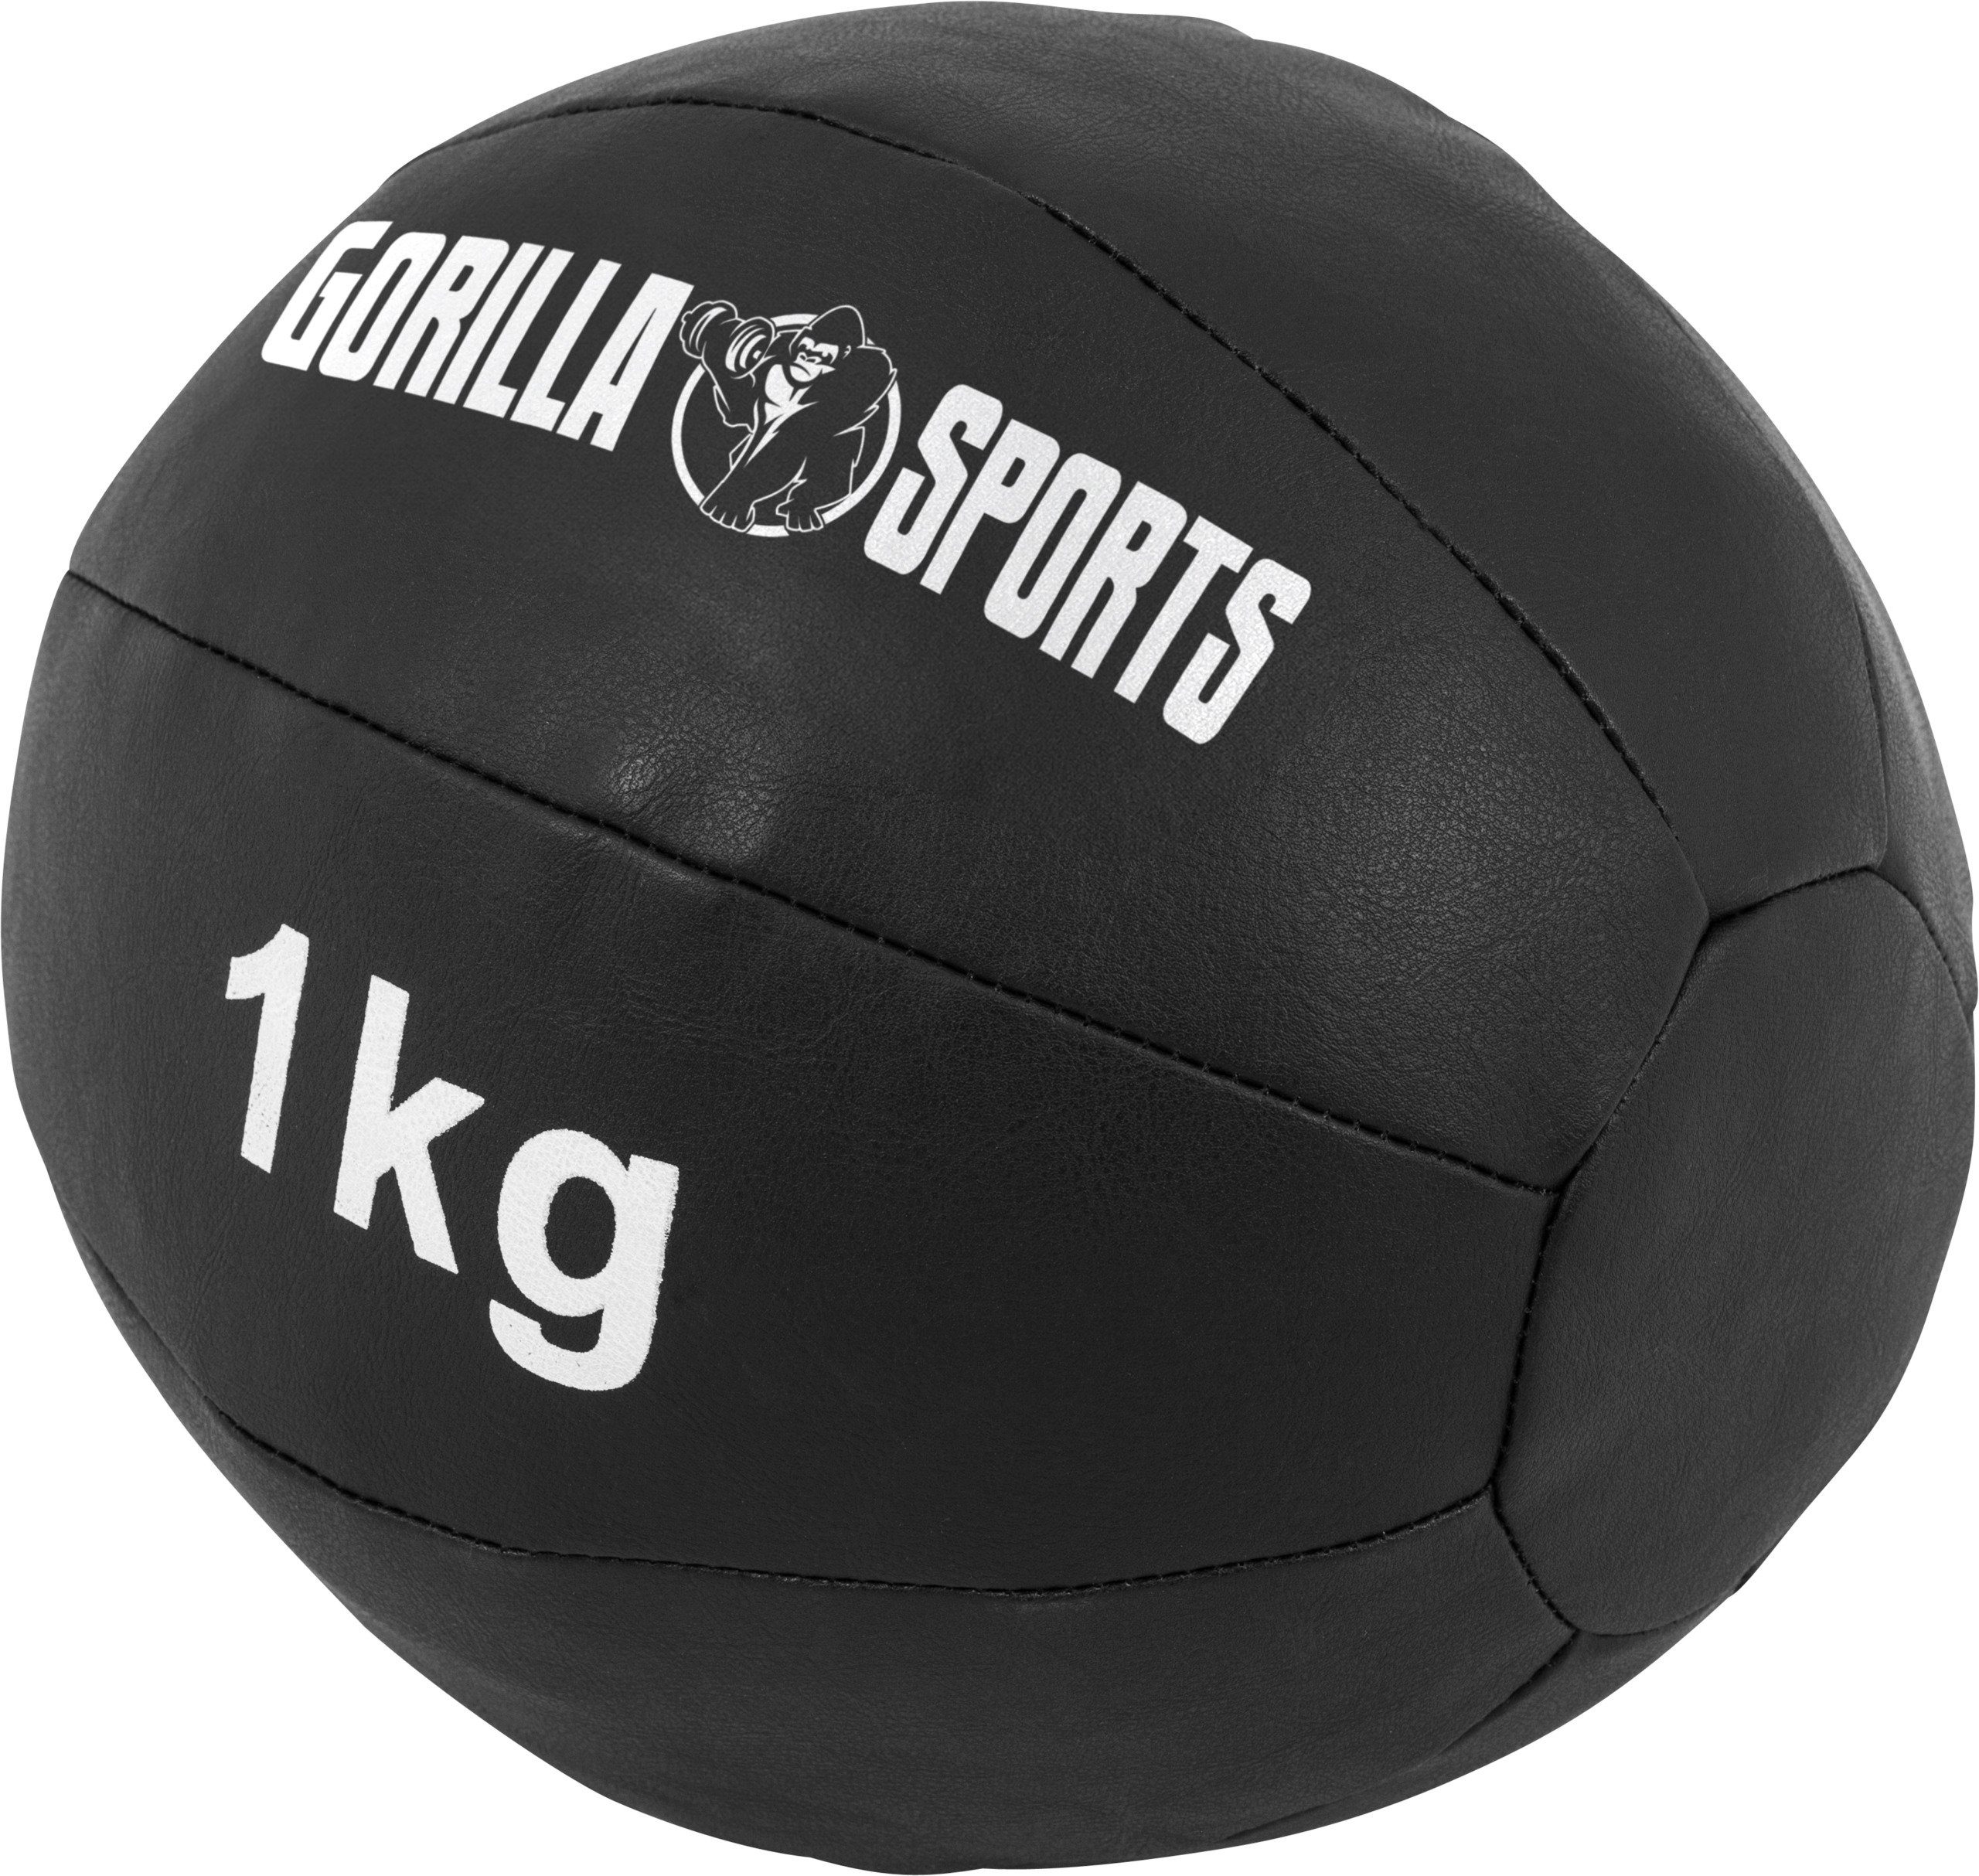 SPORTS Trainingsball, Medizinball aus kg Gewichtsball 29cm, Einzeln/Set, Leder, 1 GORILLA Fitnessball,